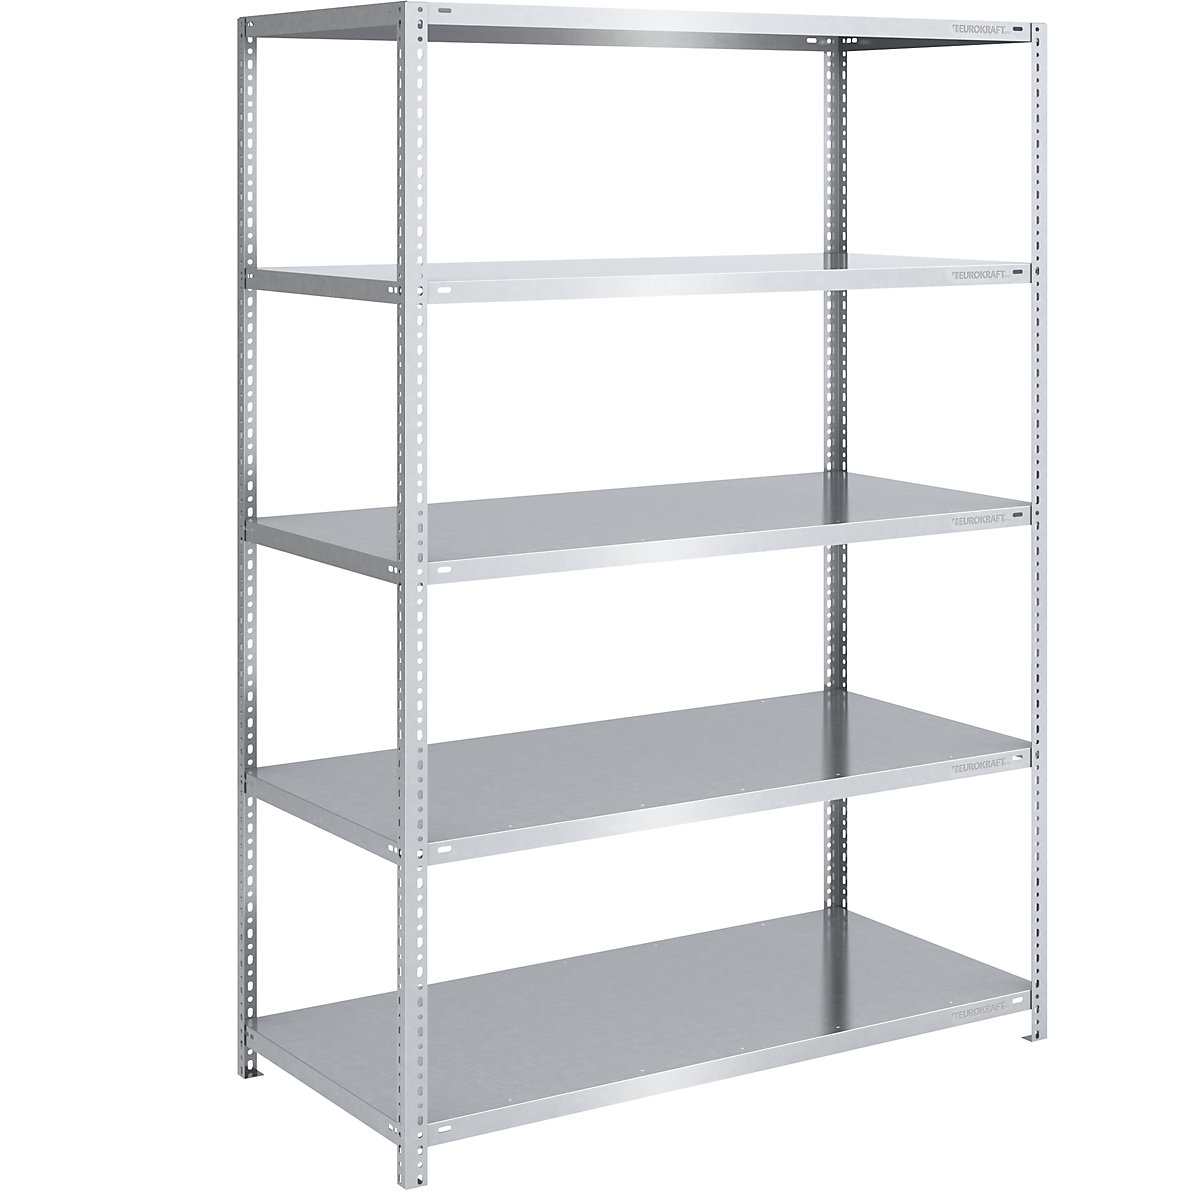 Bolt-together storage shelving, zinc plated, medium duty – eurokraft pro, shelf unit height 2000 mm, shelf width 1300 mm, depth 800 mm, standard shelf unit-11